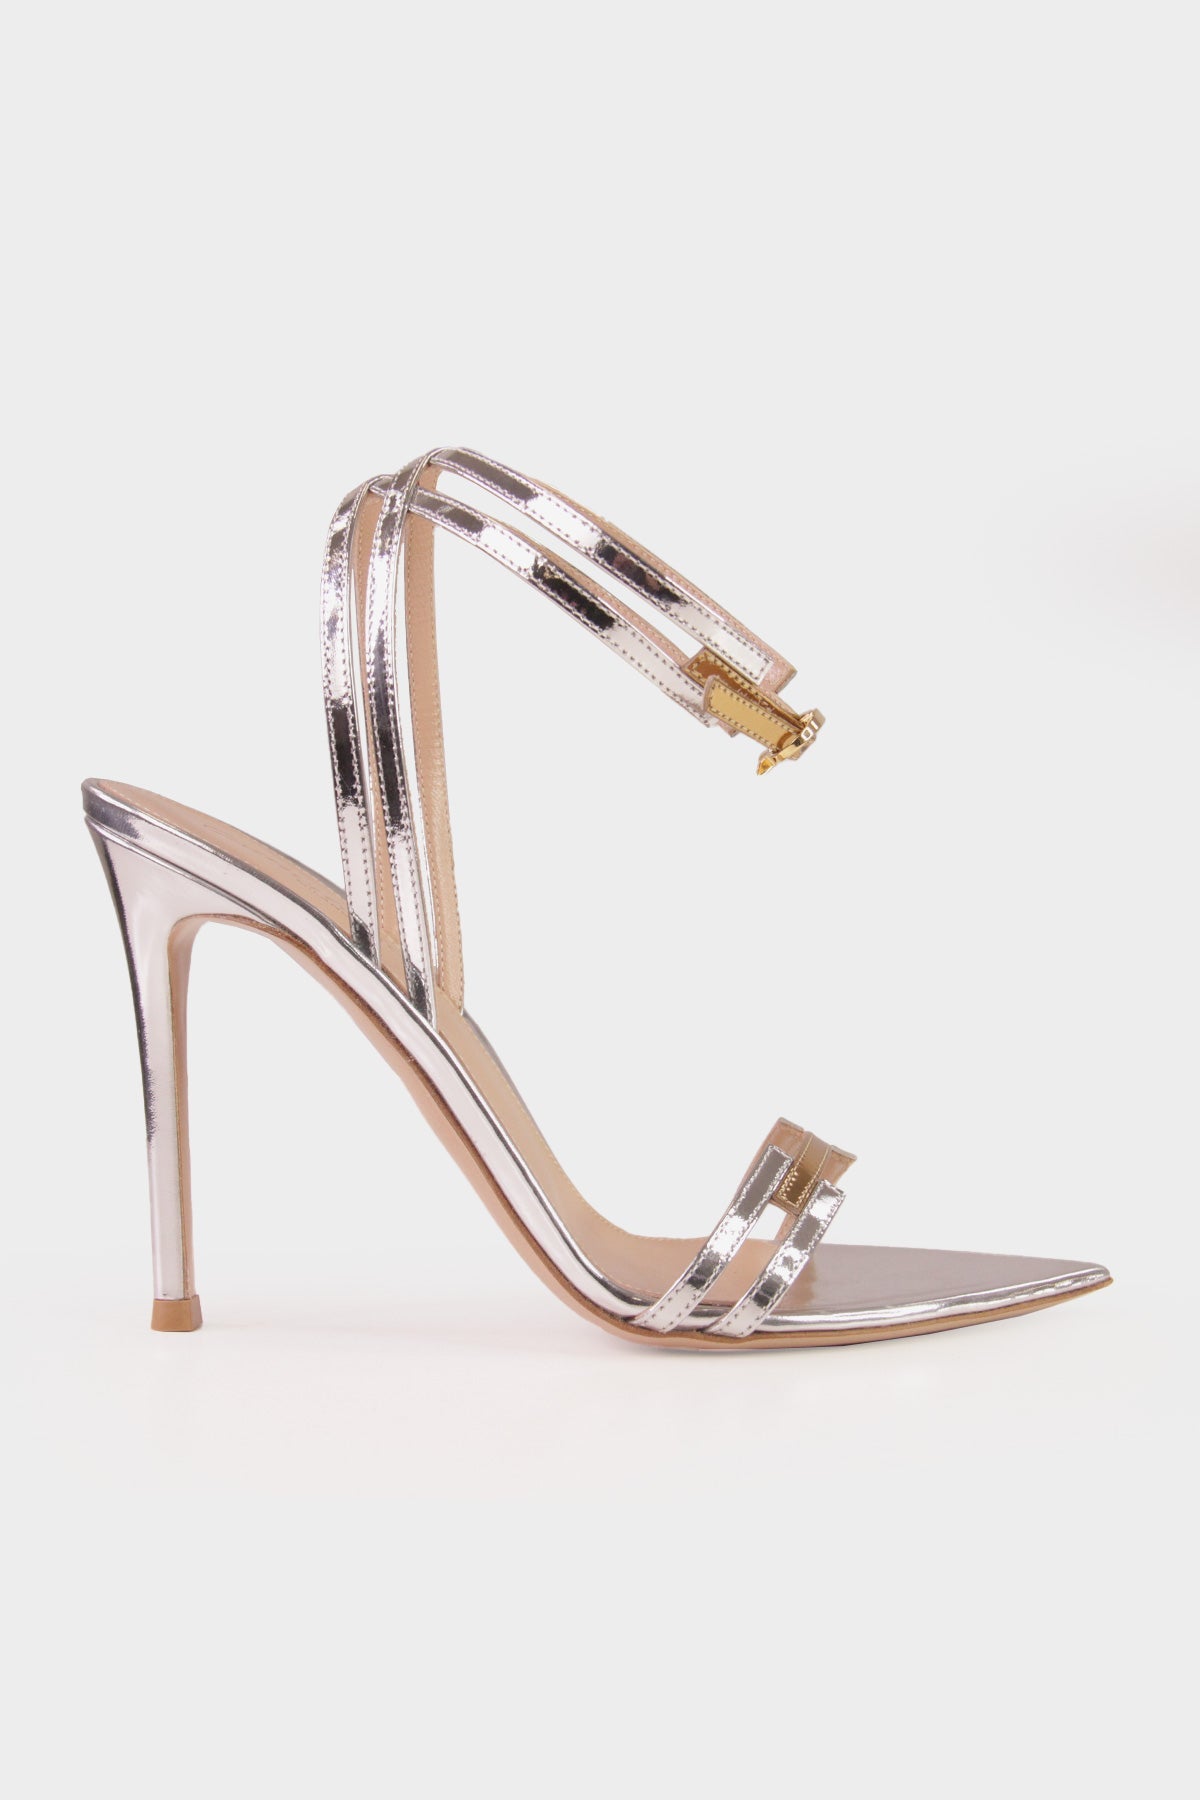 Metallic Ankle-Strap Sandal 105 in Silver Gold - shop-olivia.com